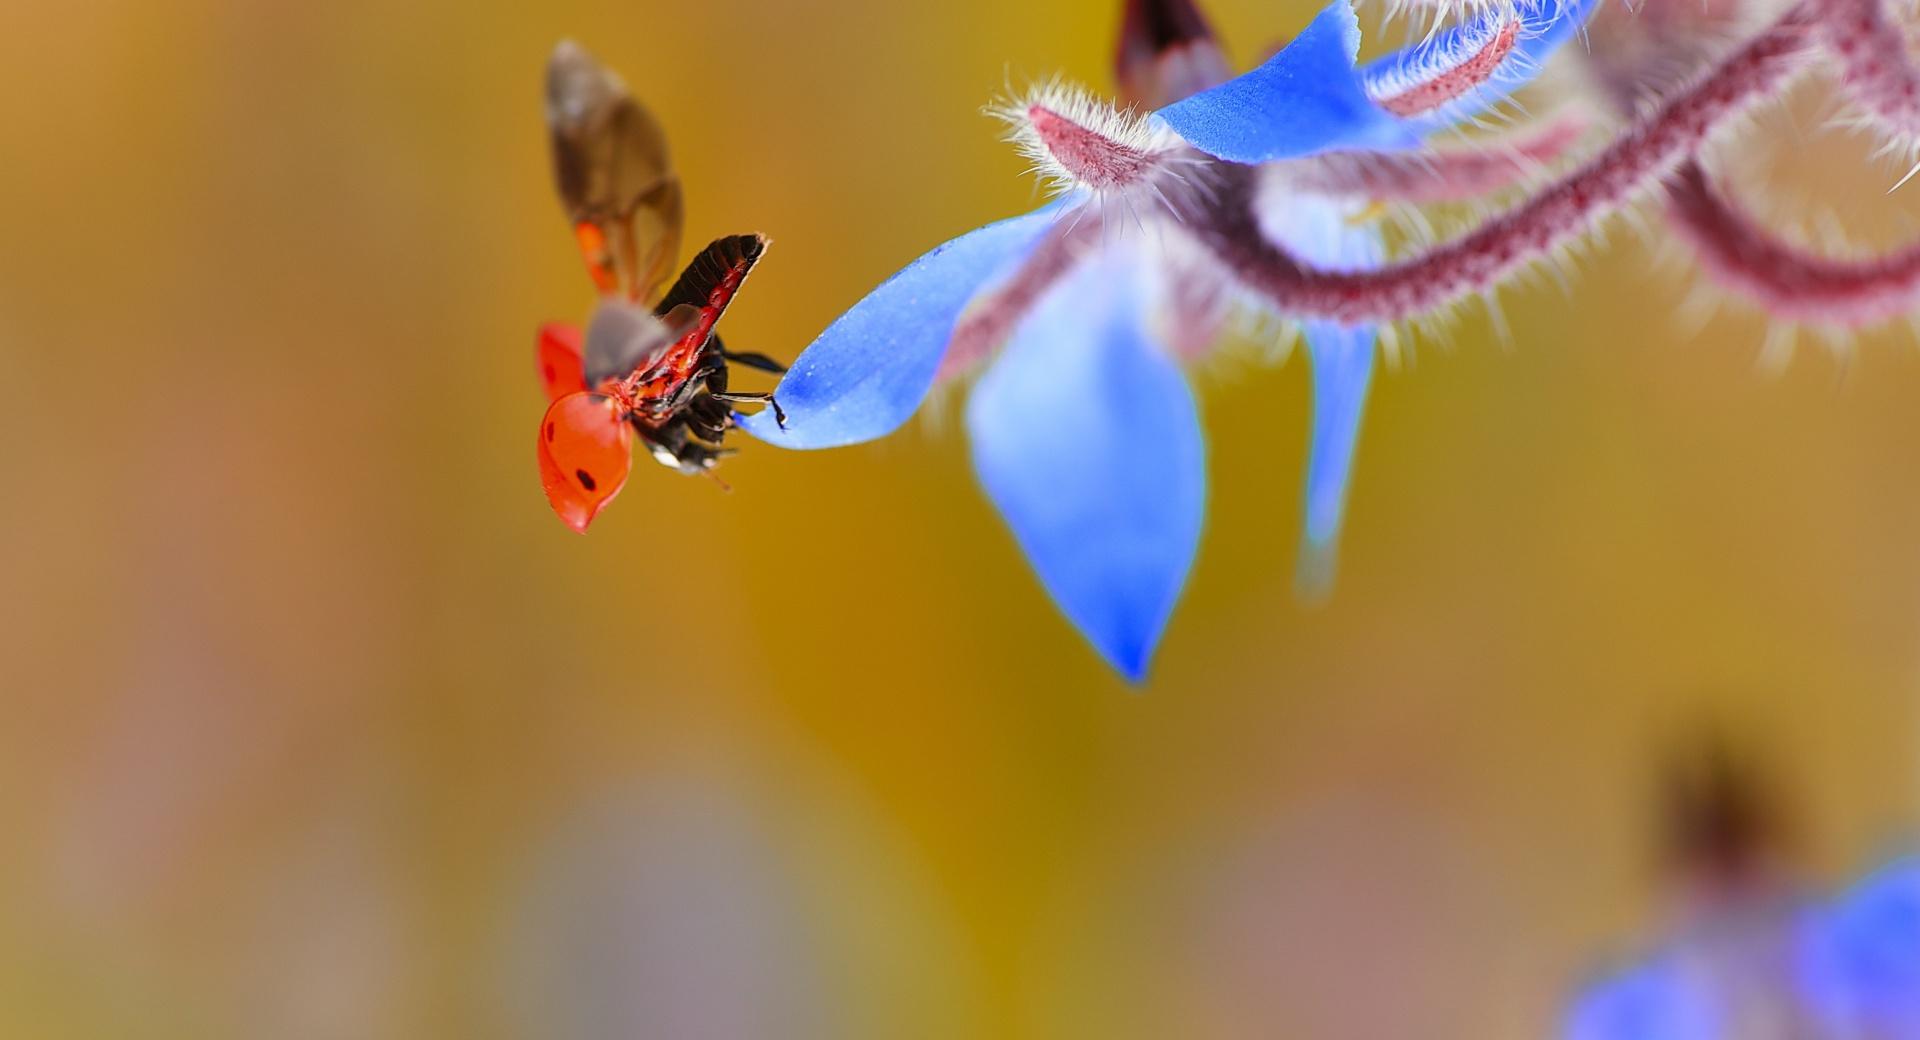 Ladybug Taking Flight at 2048 x 2048 iPad size wallpapers HD quality